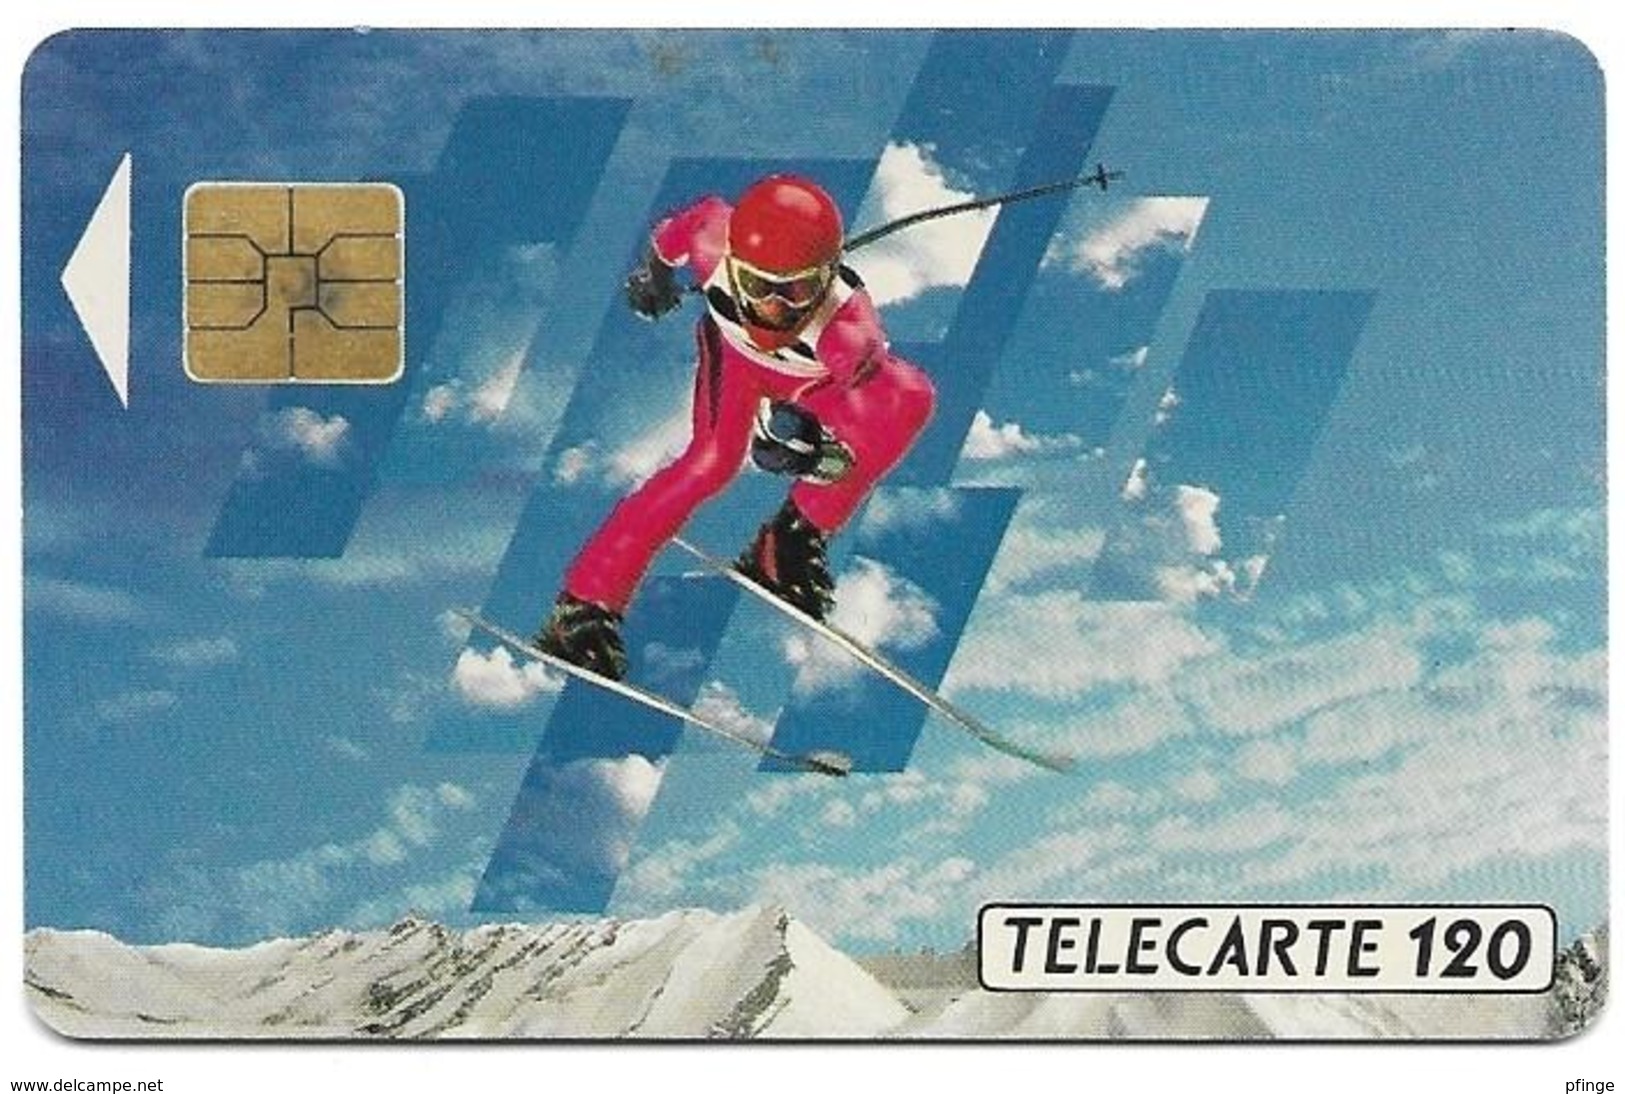 Telecarte 120 - XVIèmes J.O. D'hiver - Olympic Games